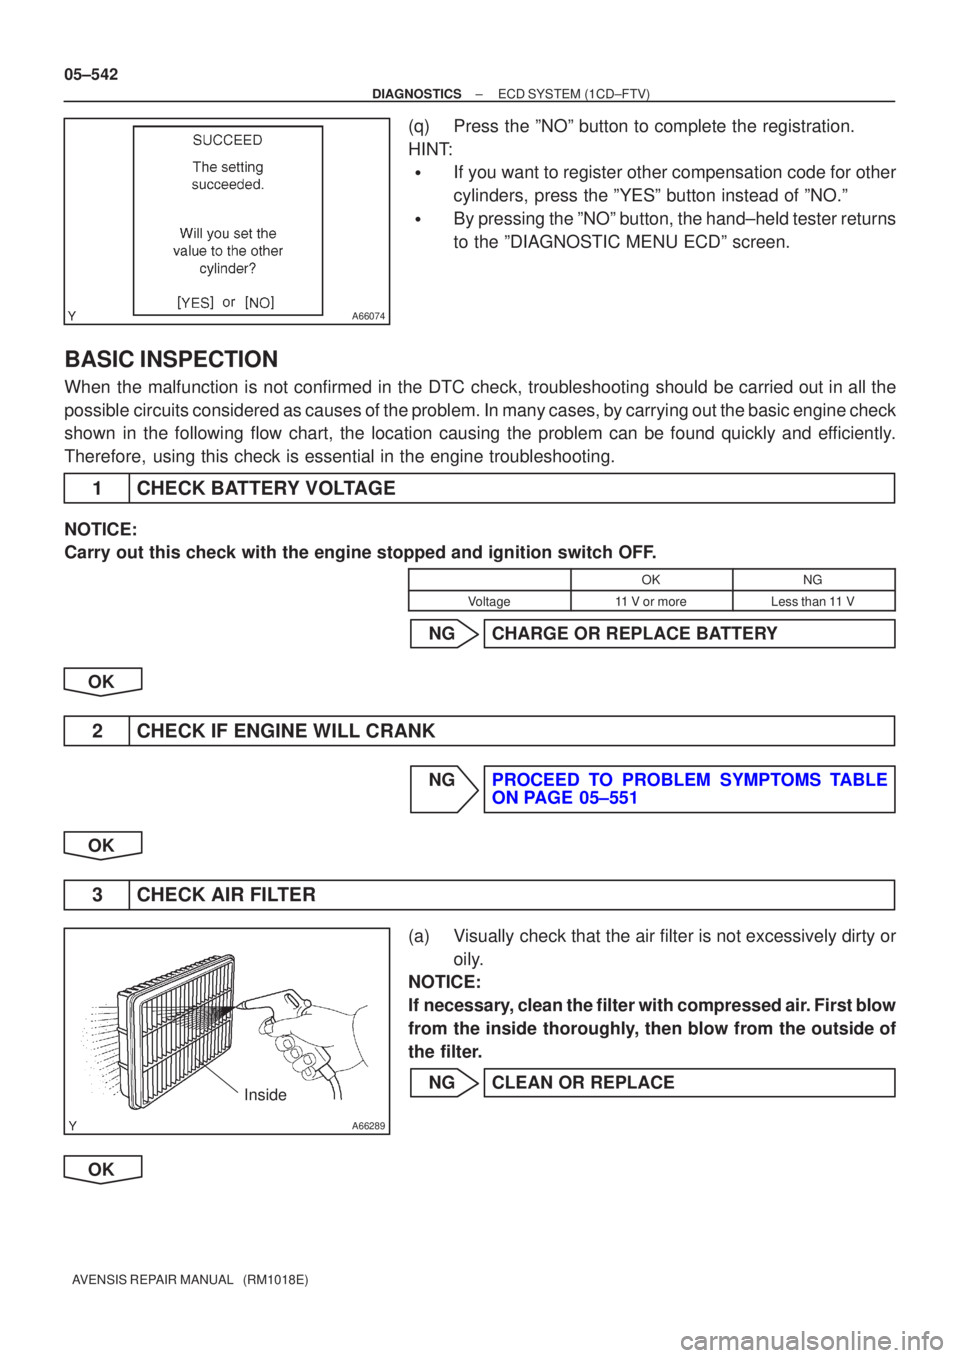 TOYOTA AVENSIS 2005  Service Repair Manual A66074
A66289
Inside
05±542
±
DIAGNOSTICS ECD SYSTEM(1CD±FTV)
AVENSIS REPAIR MANUAL   (RM1018E)
(q)Press the ºNOº button to complete the registration.
HINT:
If you want to register other compens